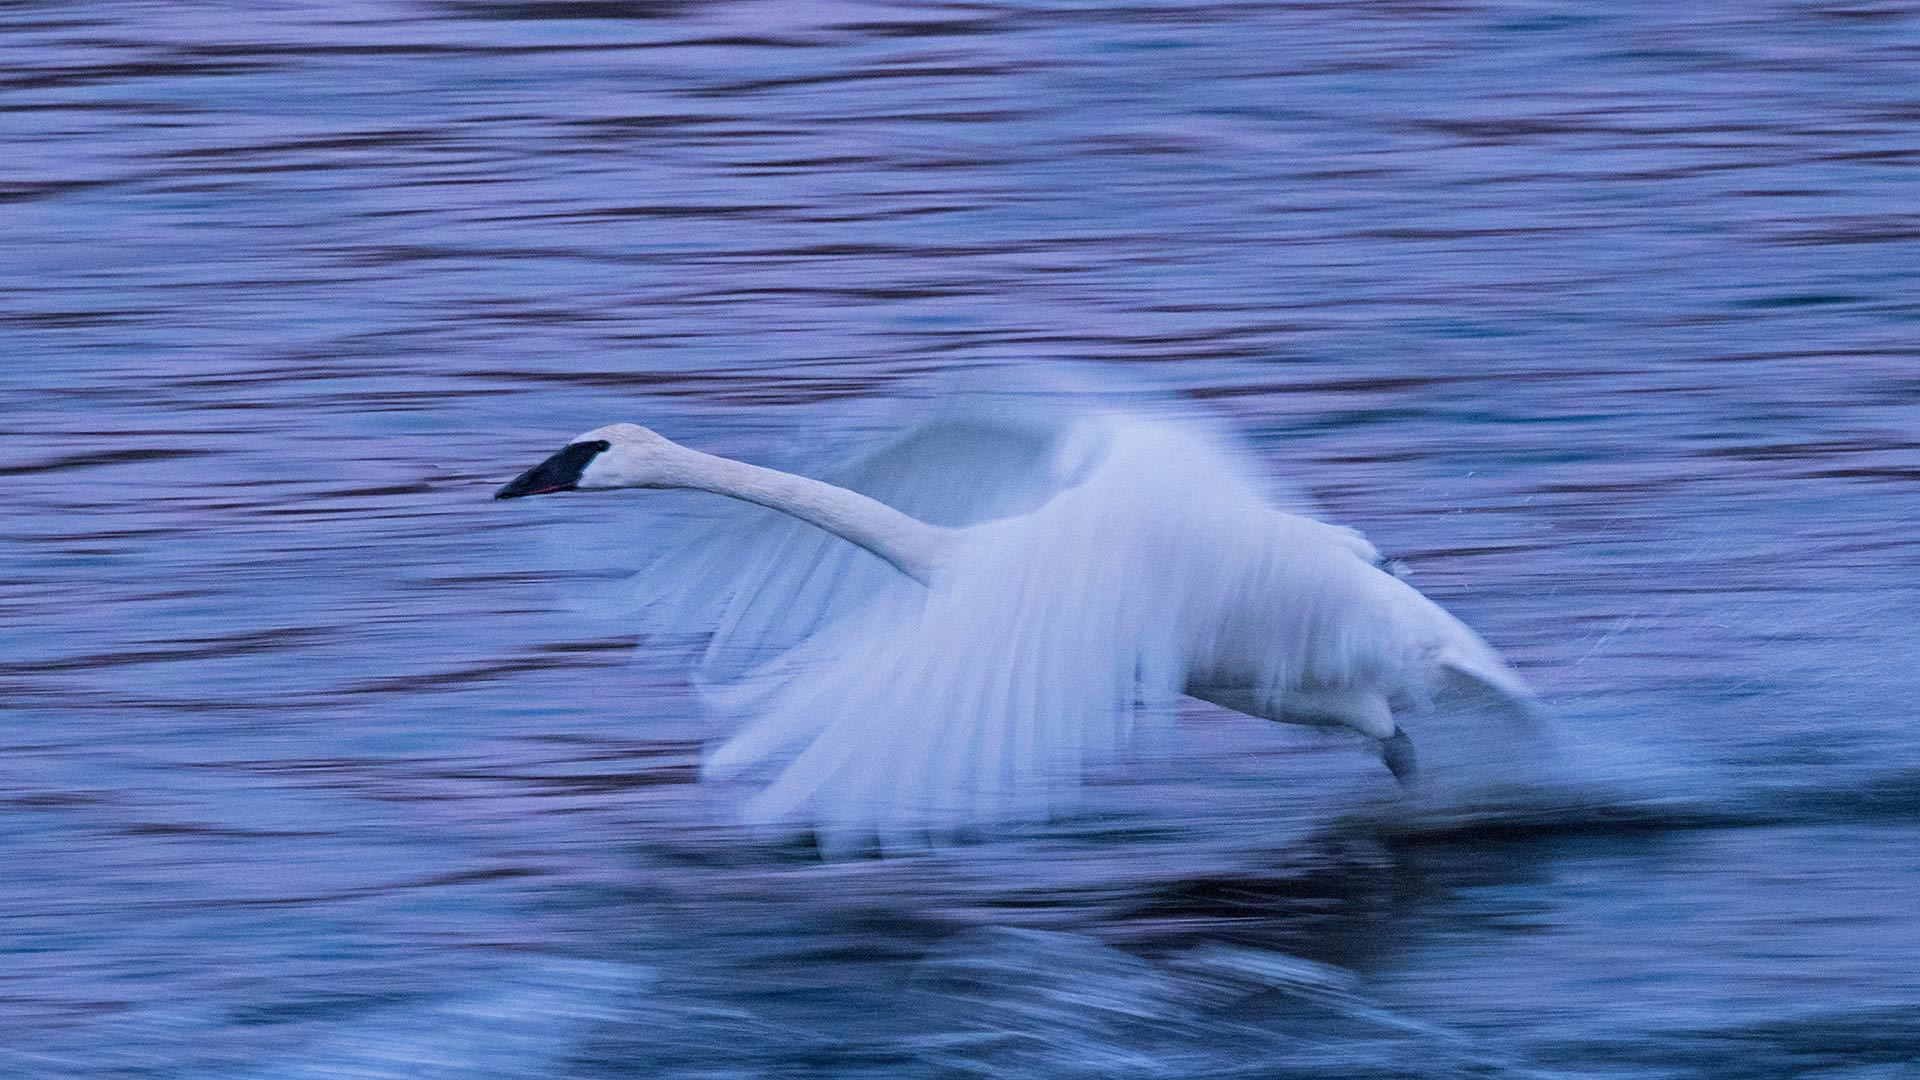 Autumn’s swan song